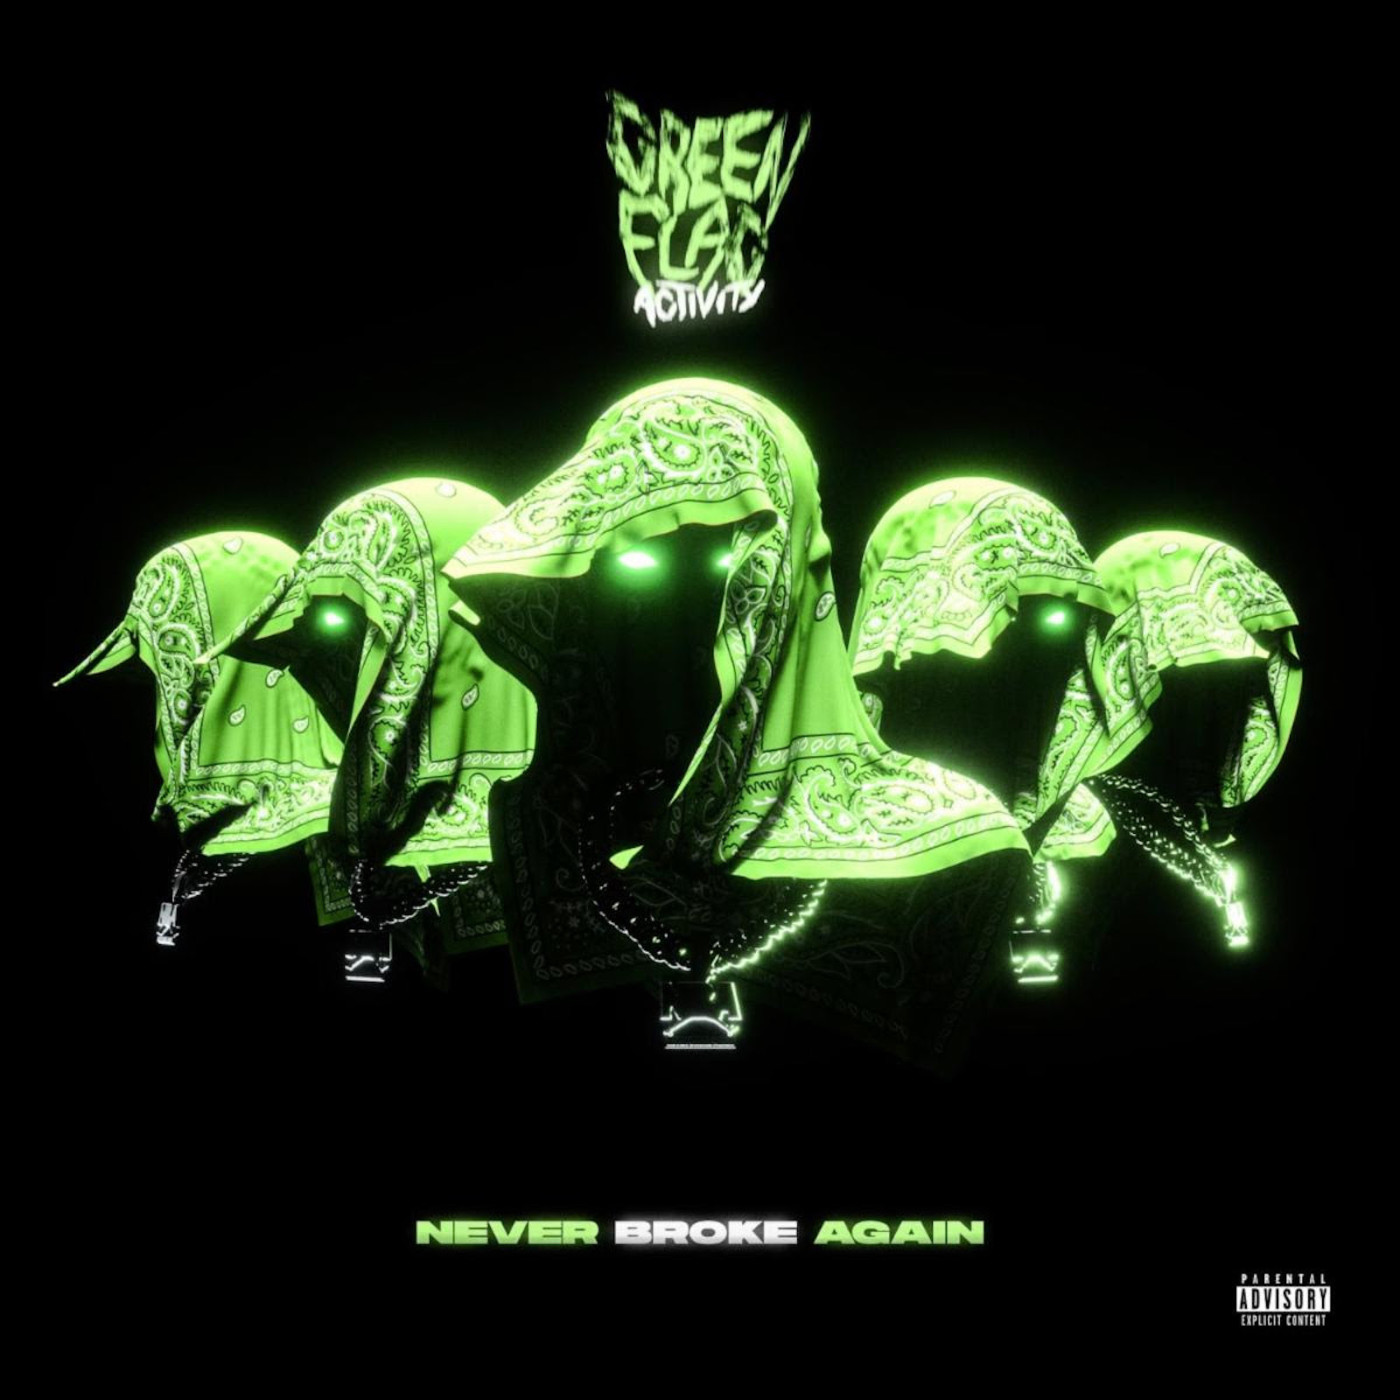 YoungBoy Never Broke Again Drops 'Green Flag Activity' Compilation Mixtape  | Complex